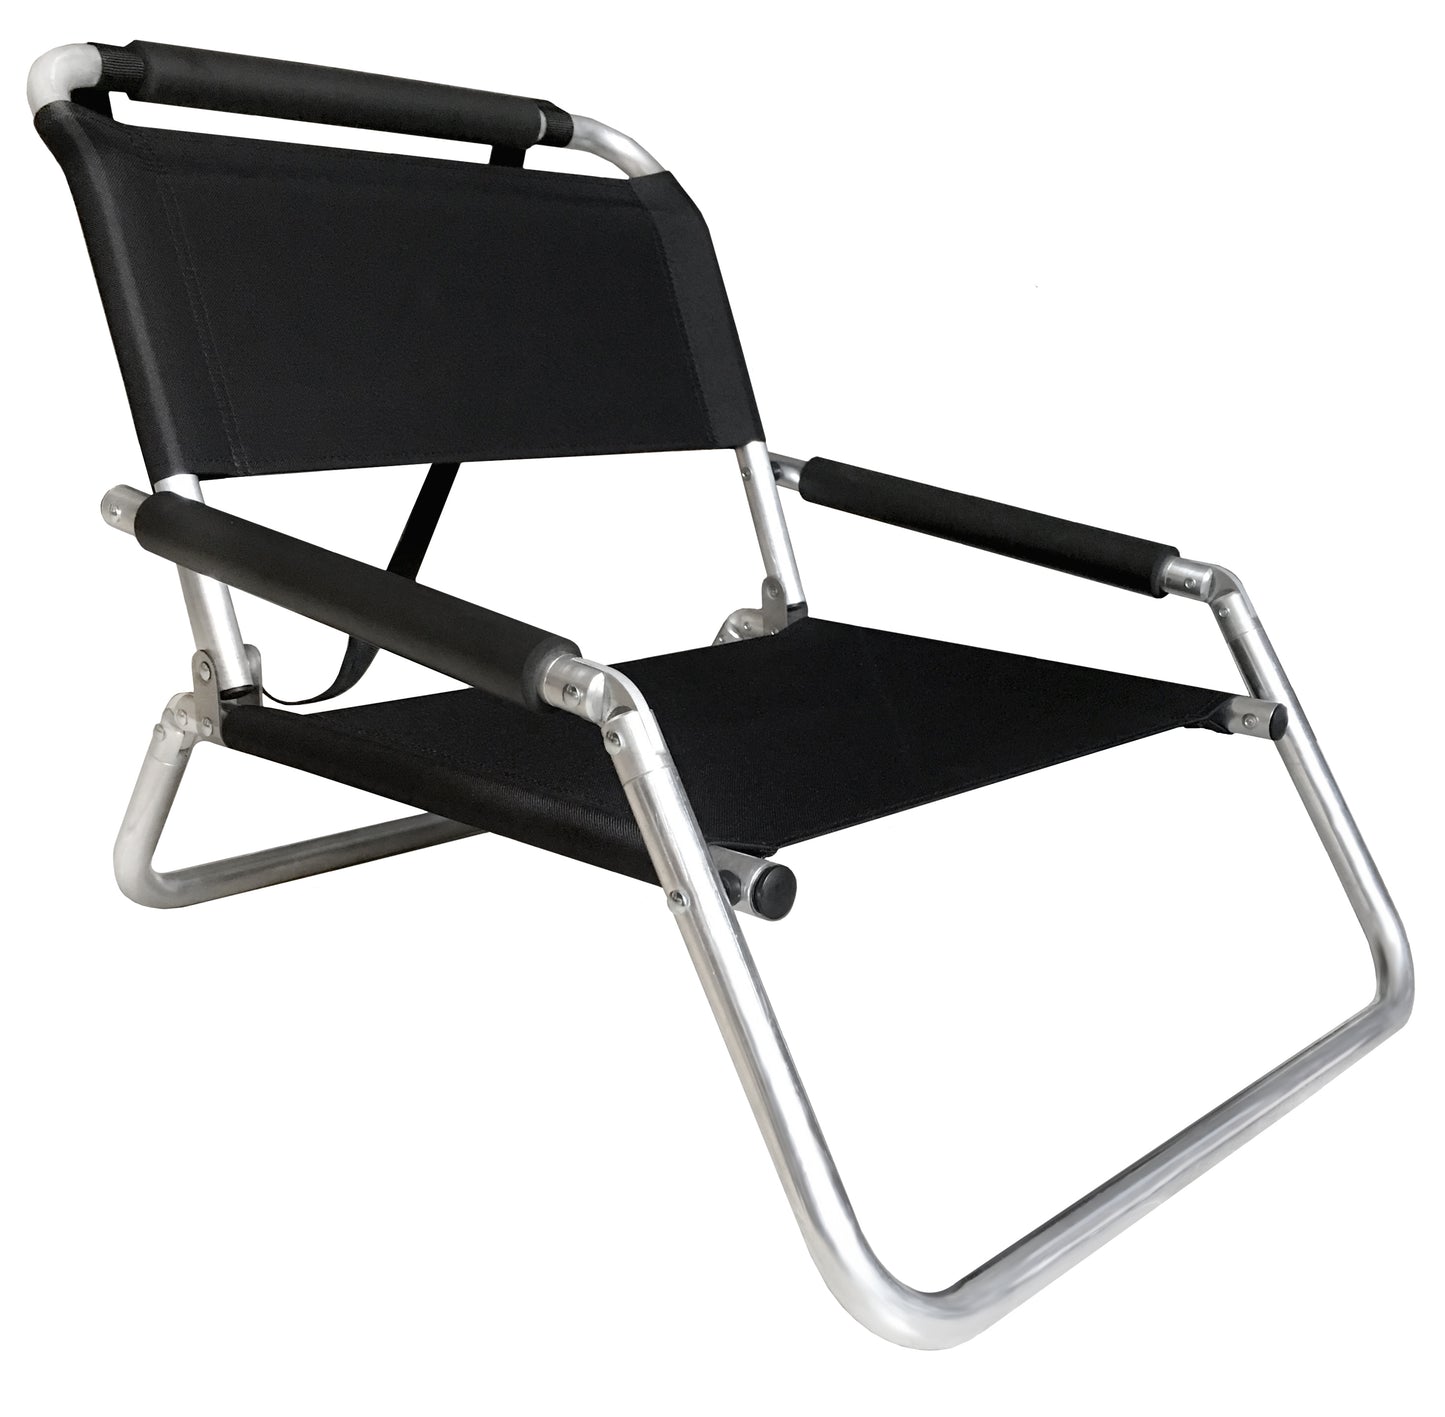 Neso Chairs - Black (2 PK) USED